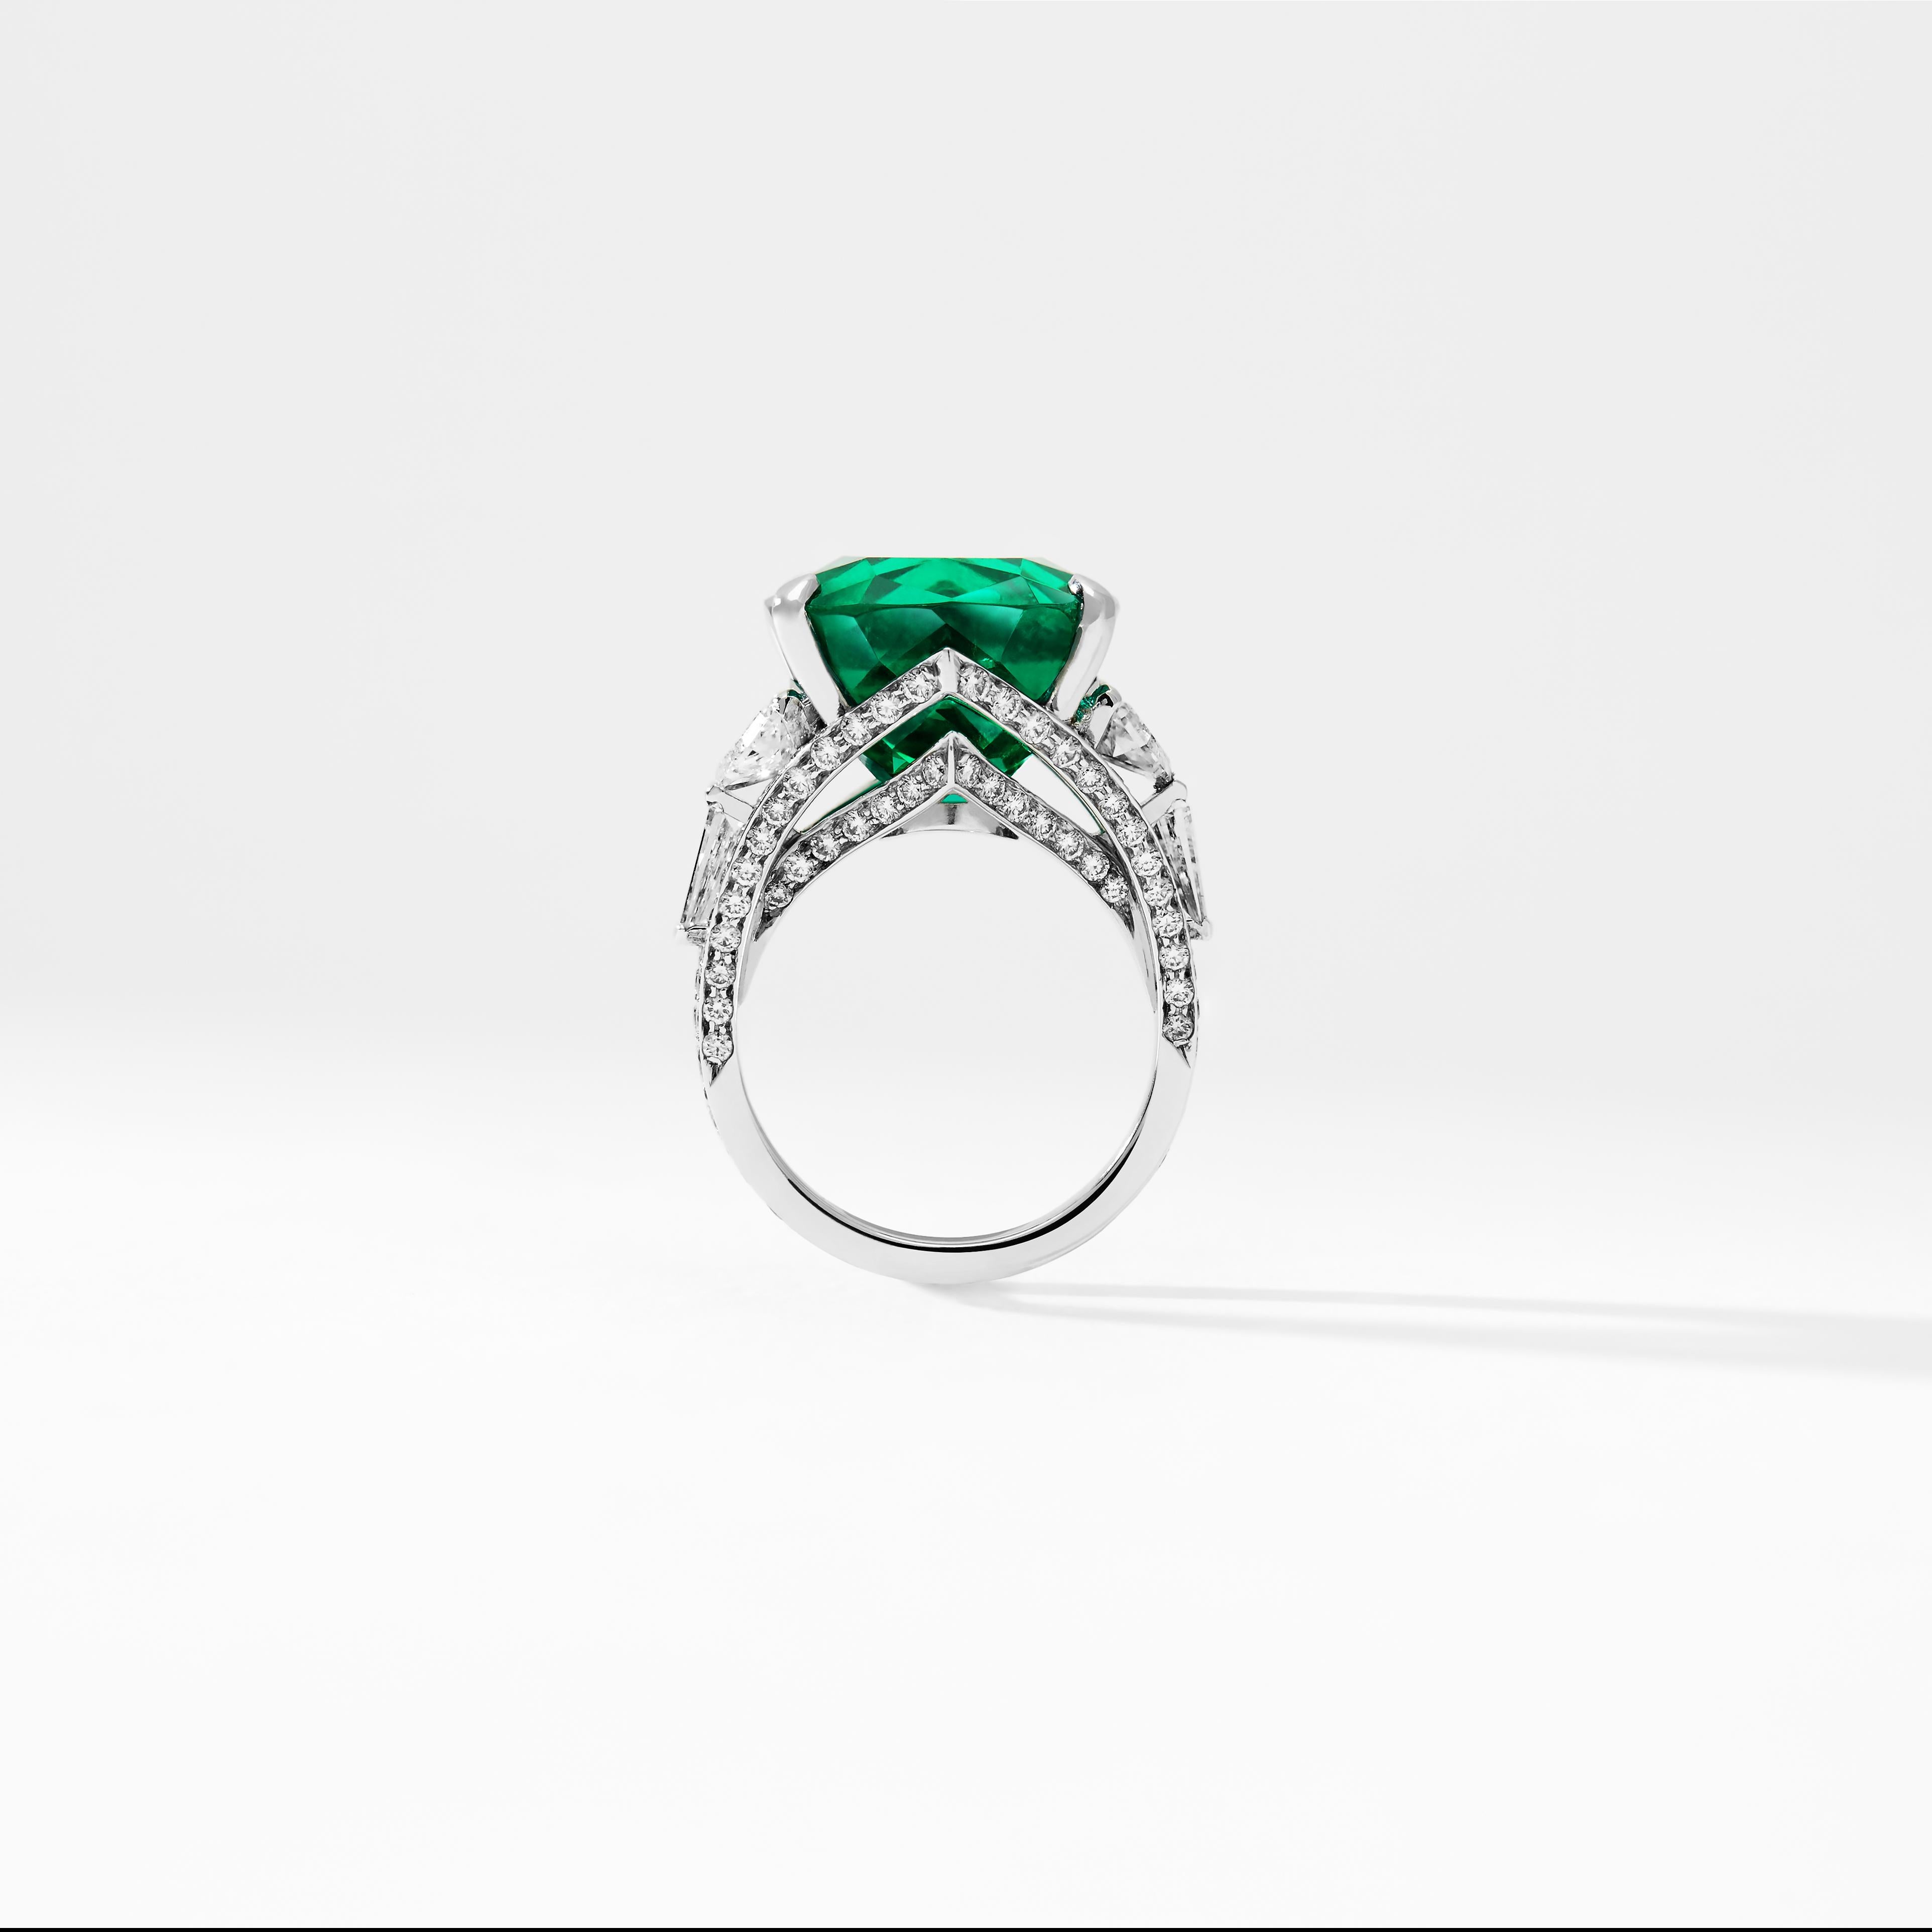 Round Cut Fabergé Platinum 13.69ct Cushion Cut Emerald Ring Set With White Diamonds For Sale